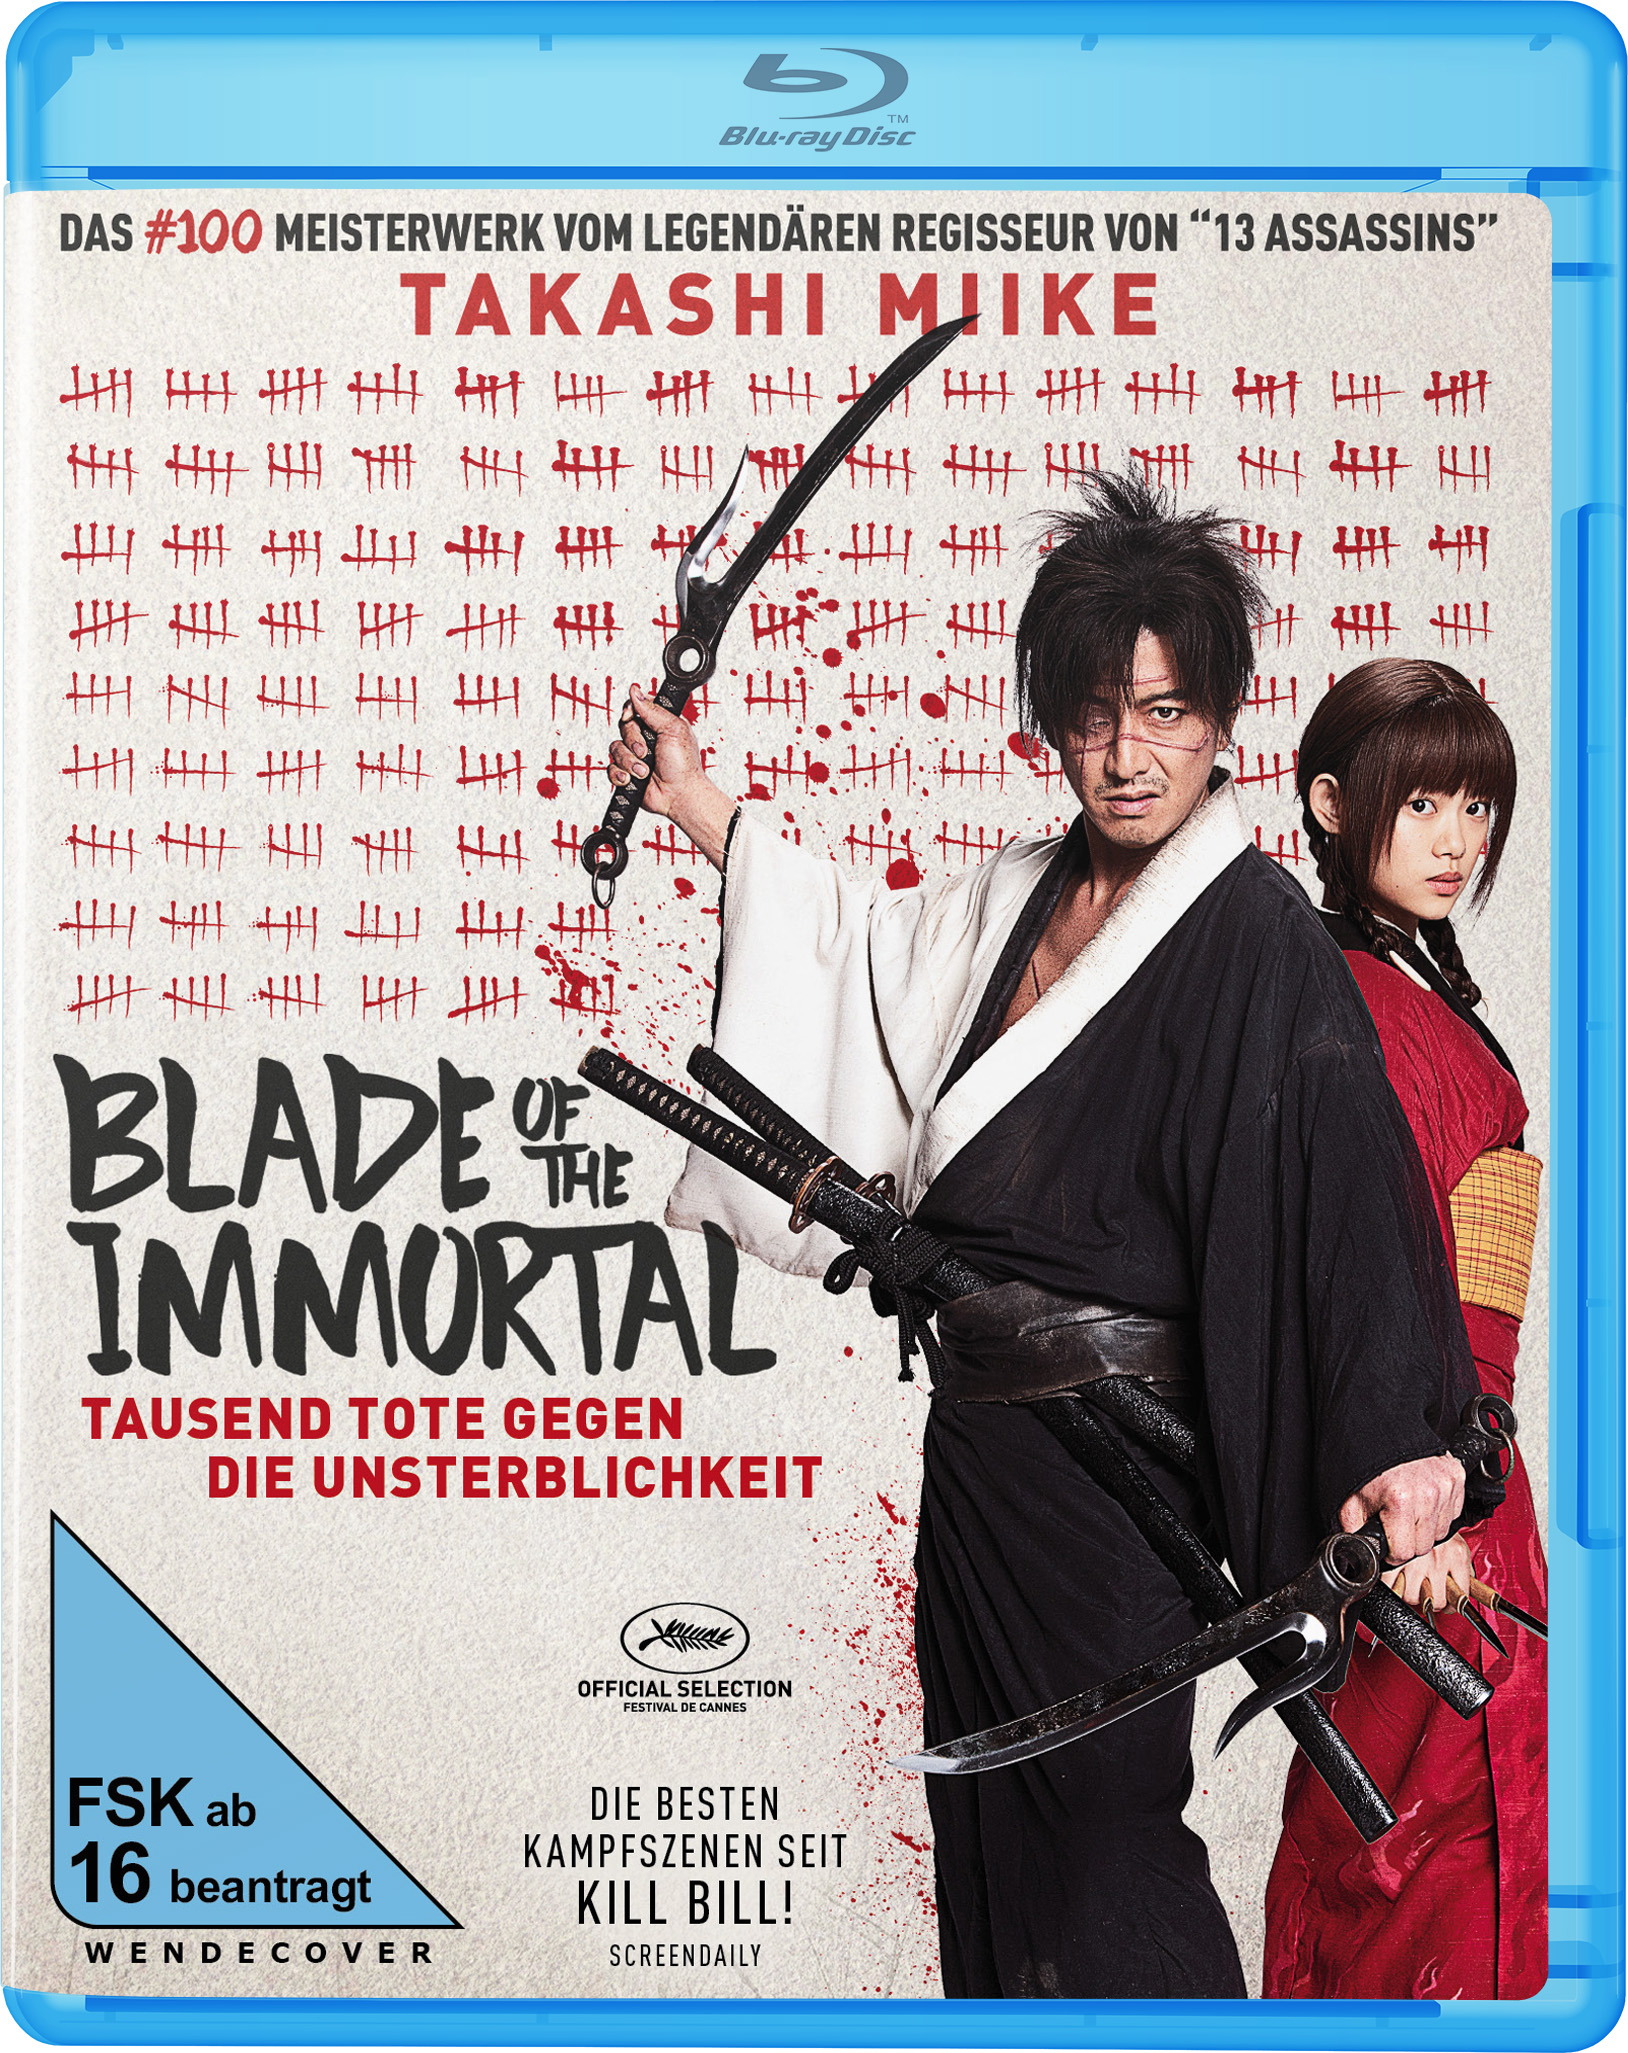 Blade of the Blu-ray Immortal